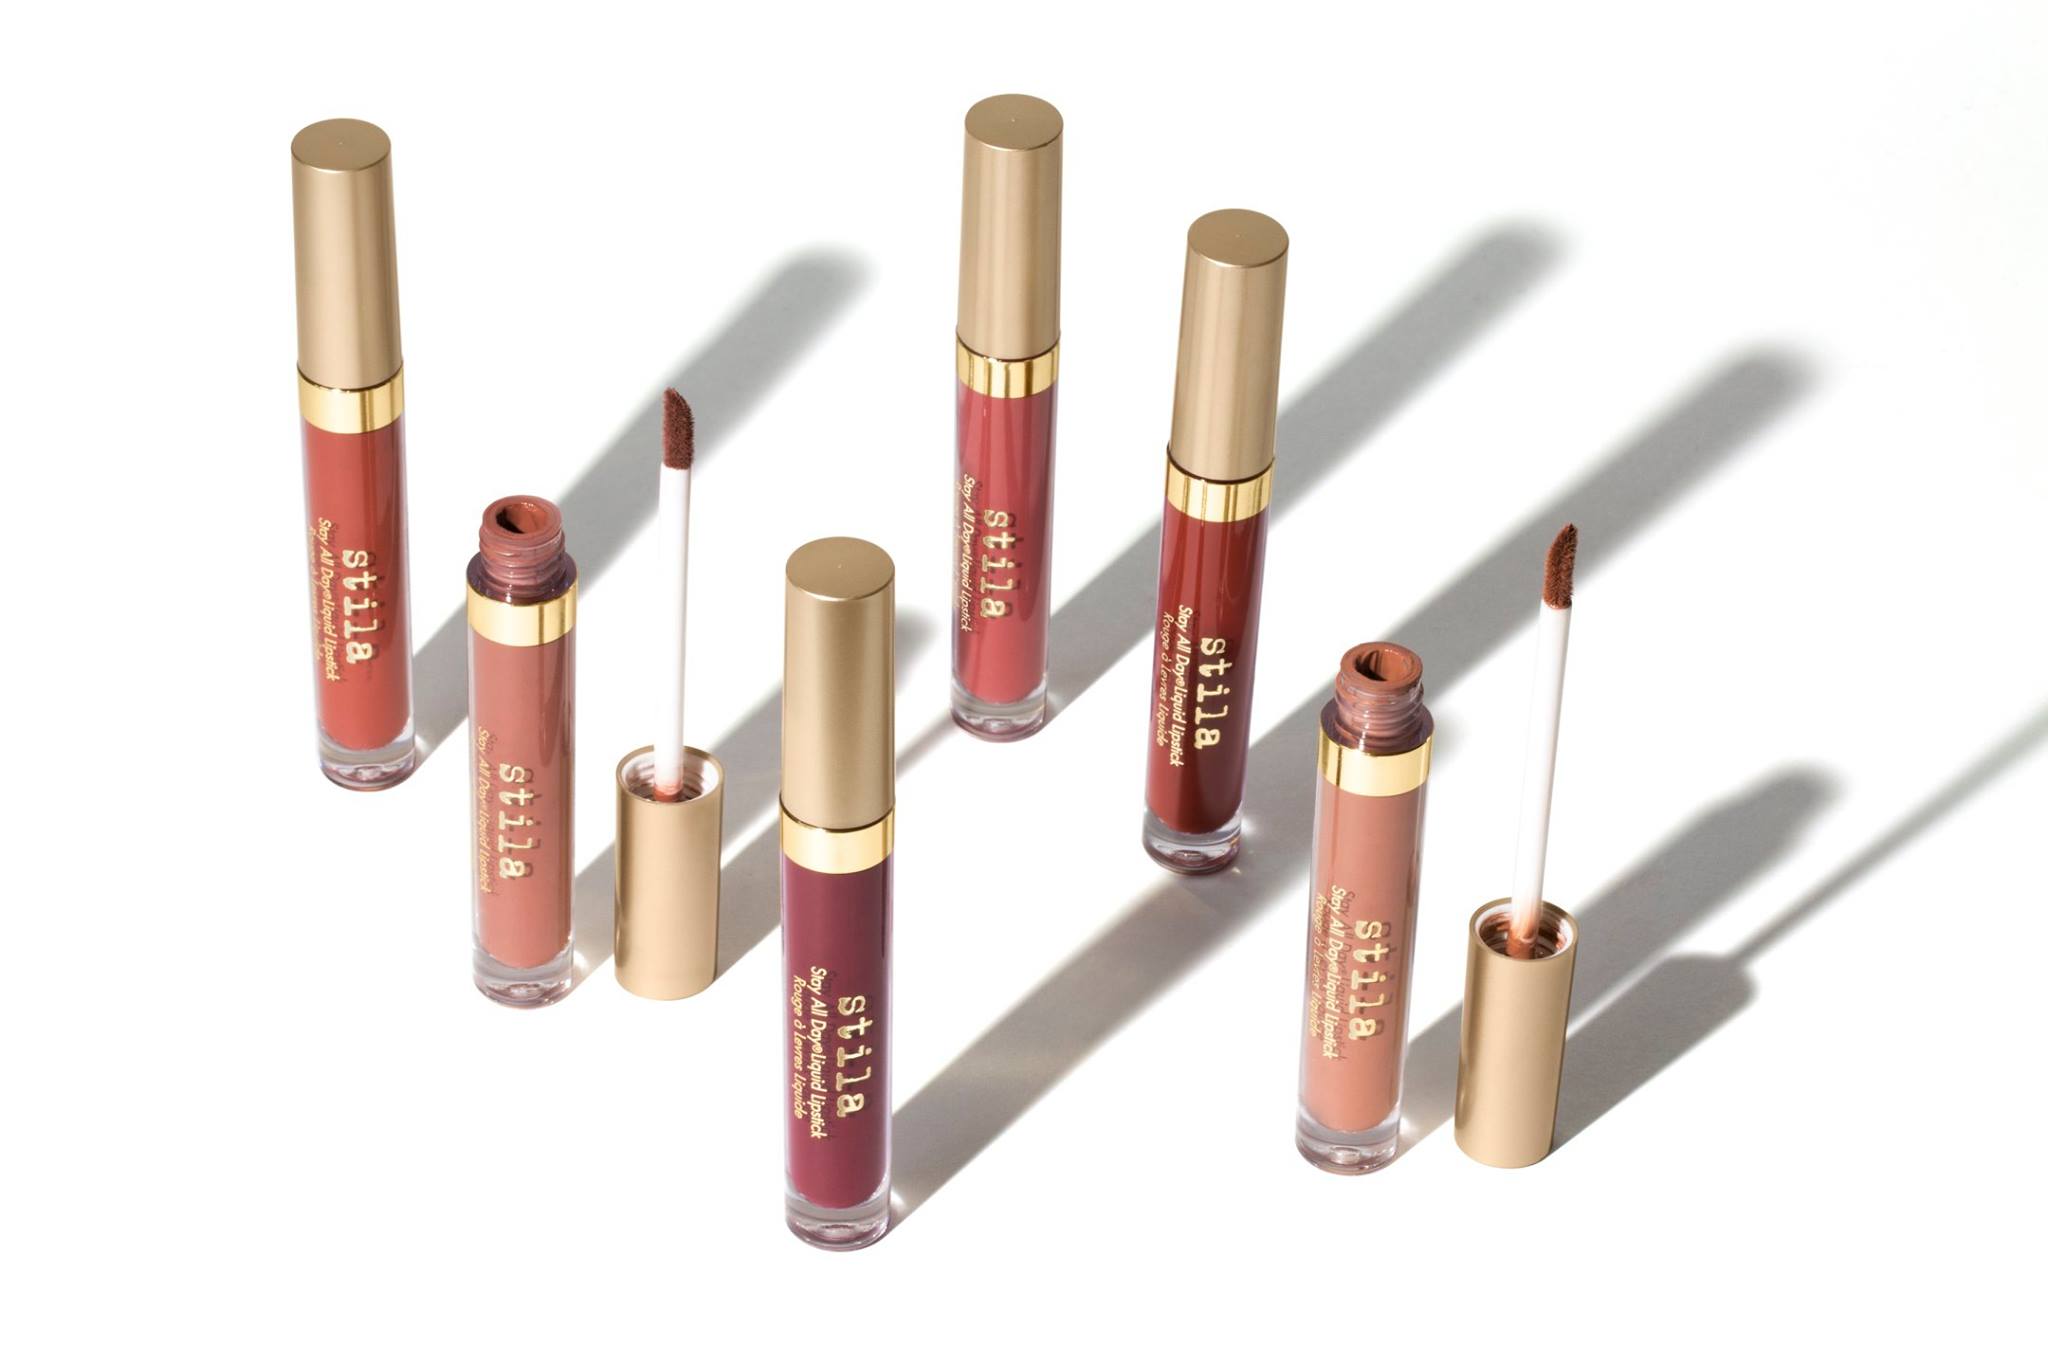 Stila: Lipstick is buy one, get one FREE through Saturday!